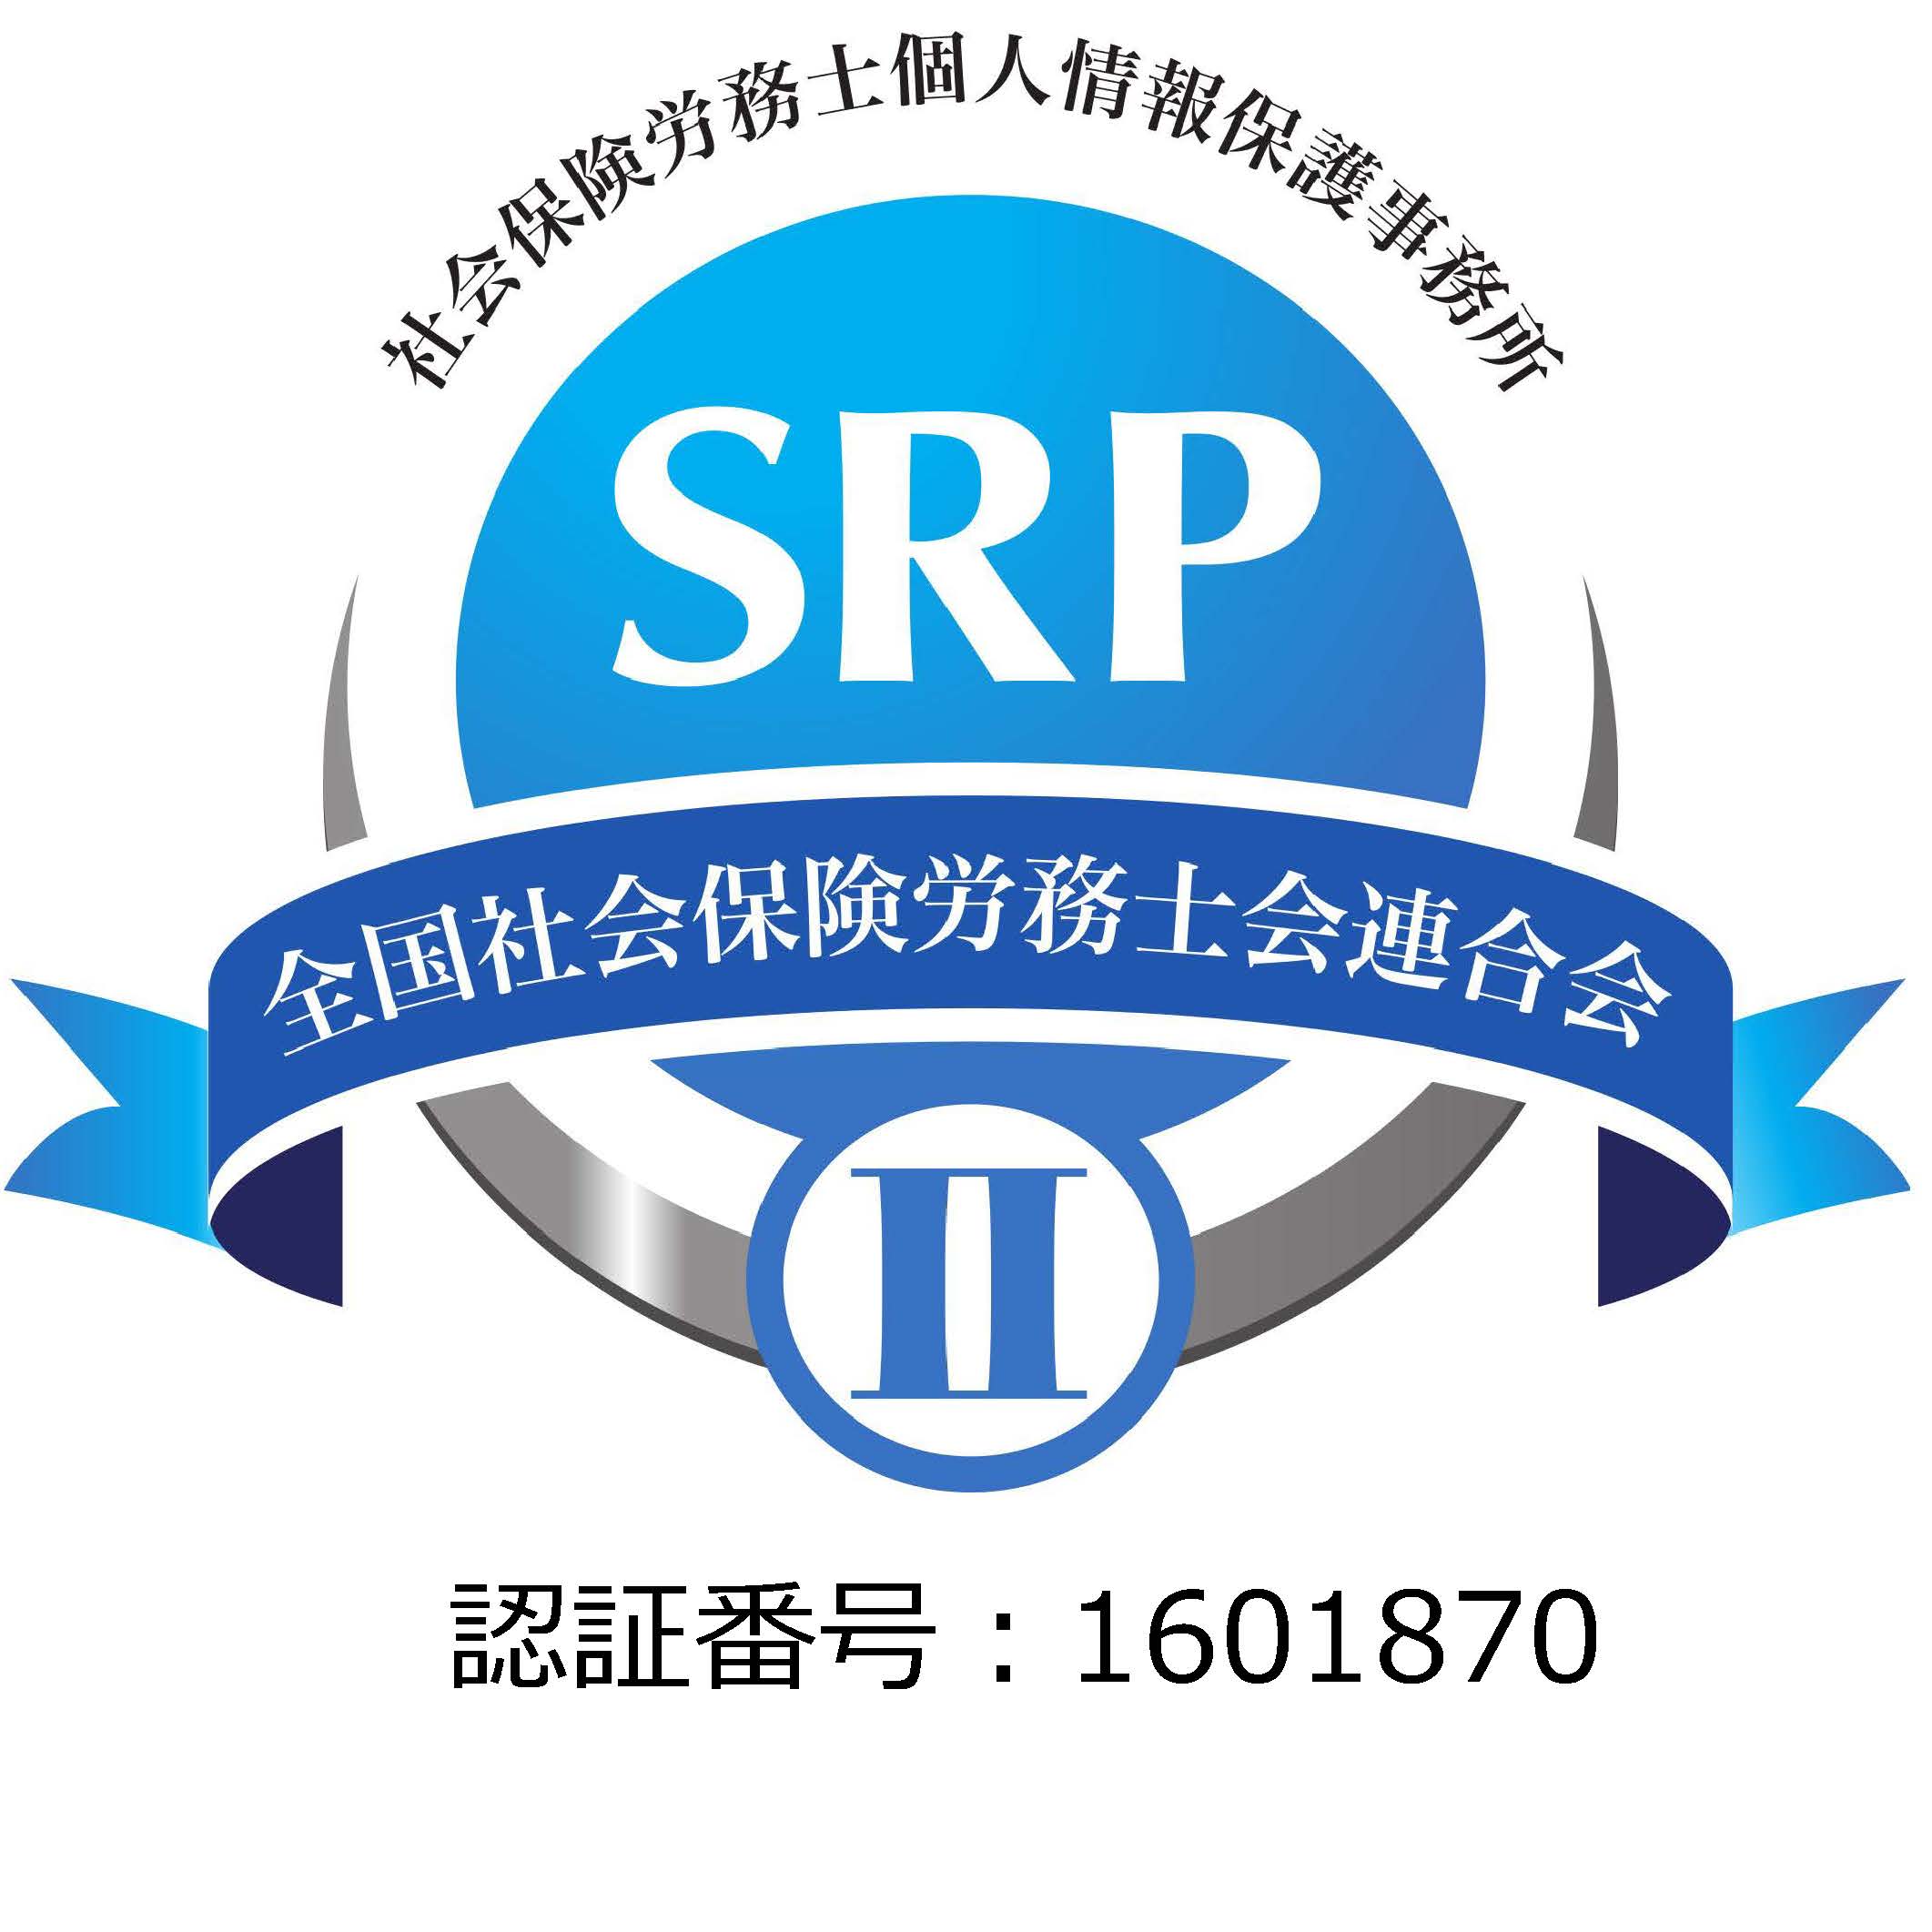 SRP2認証事務所